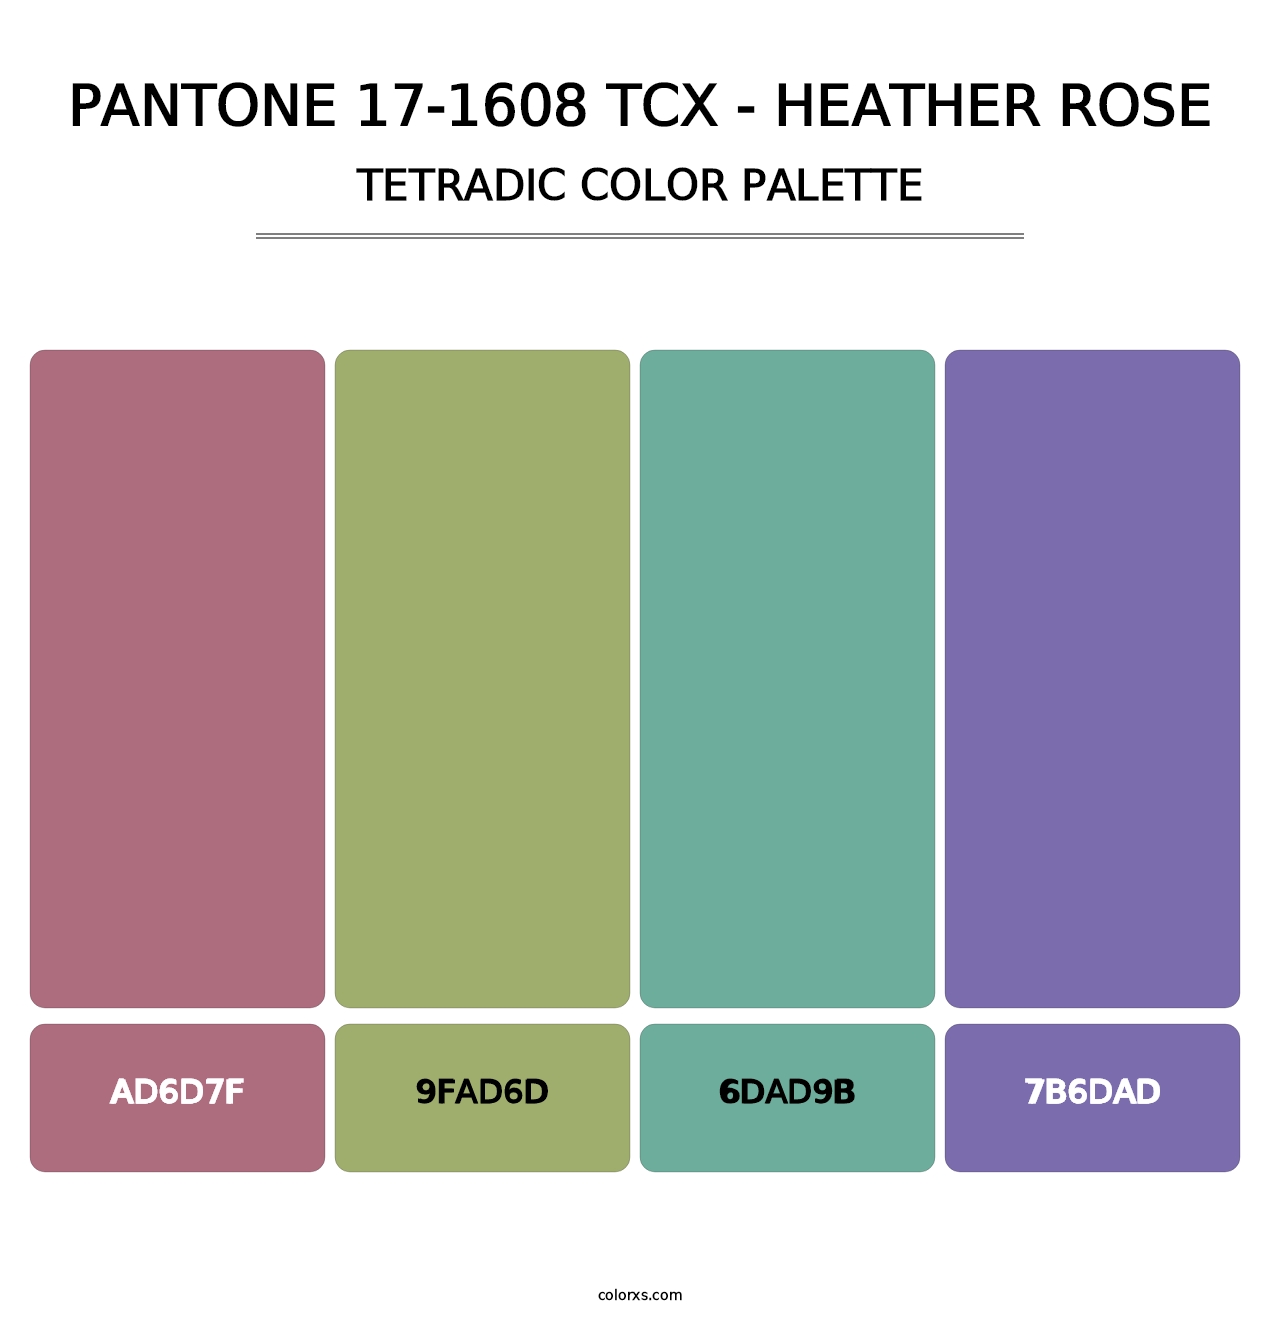 PANTONE 17-1608 TCX - Heather Rose - Tetradic Color Palette